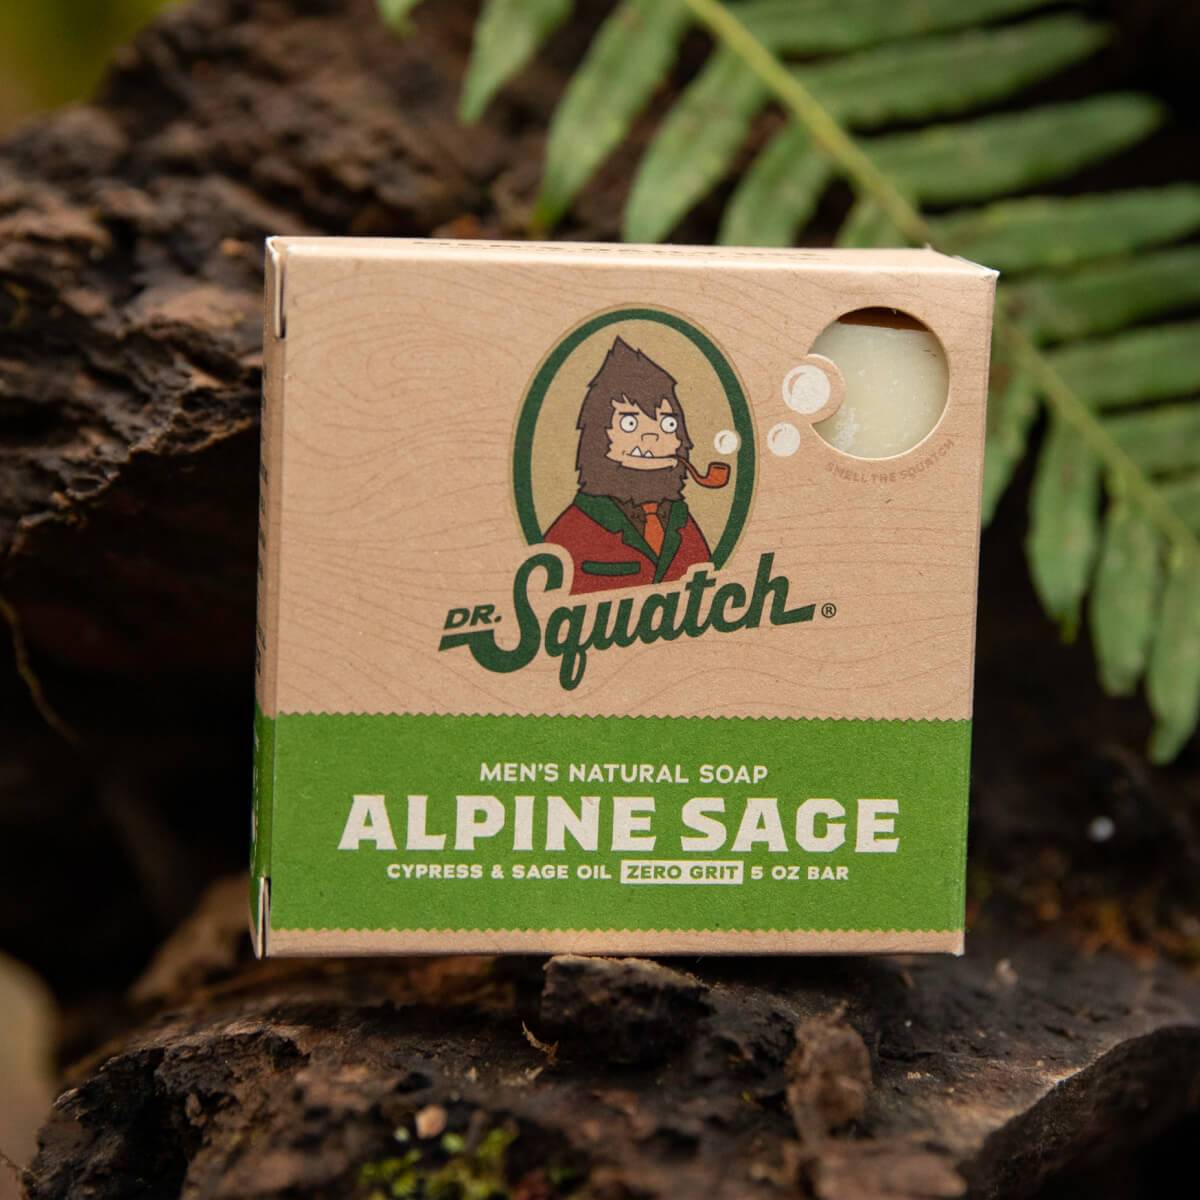 Dr. Squatch Bar Soap - Alpine Sage